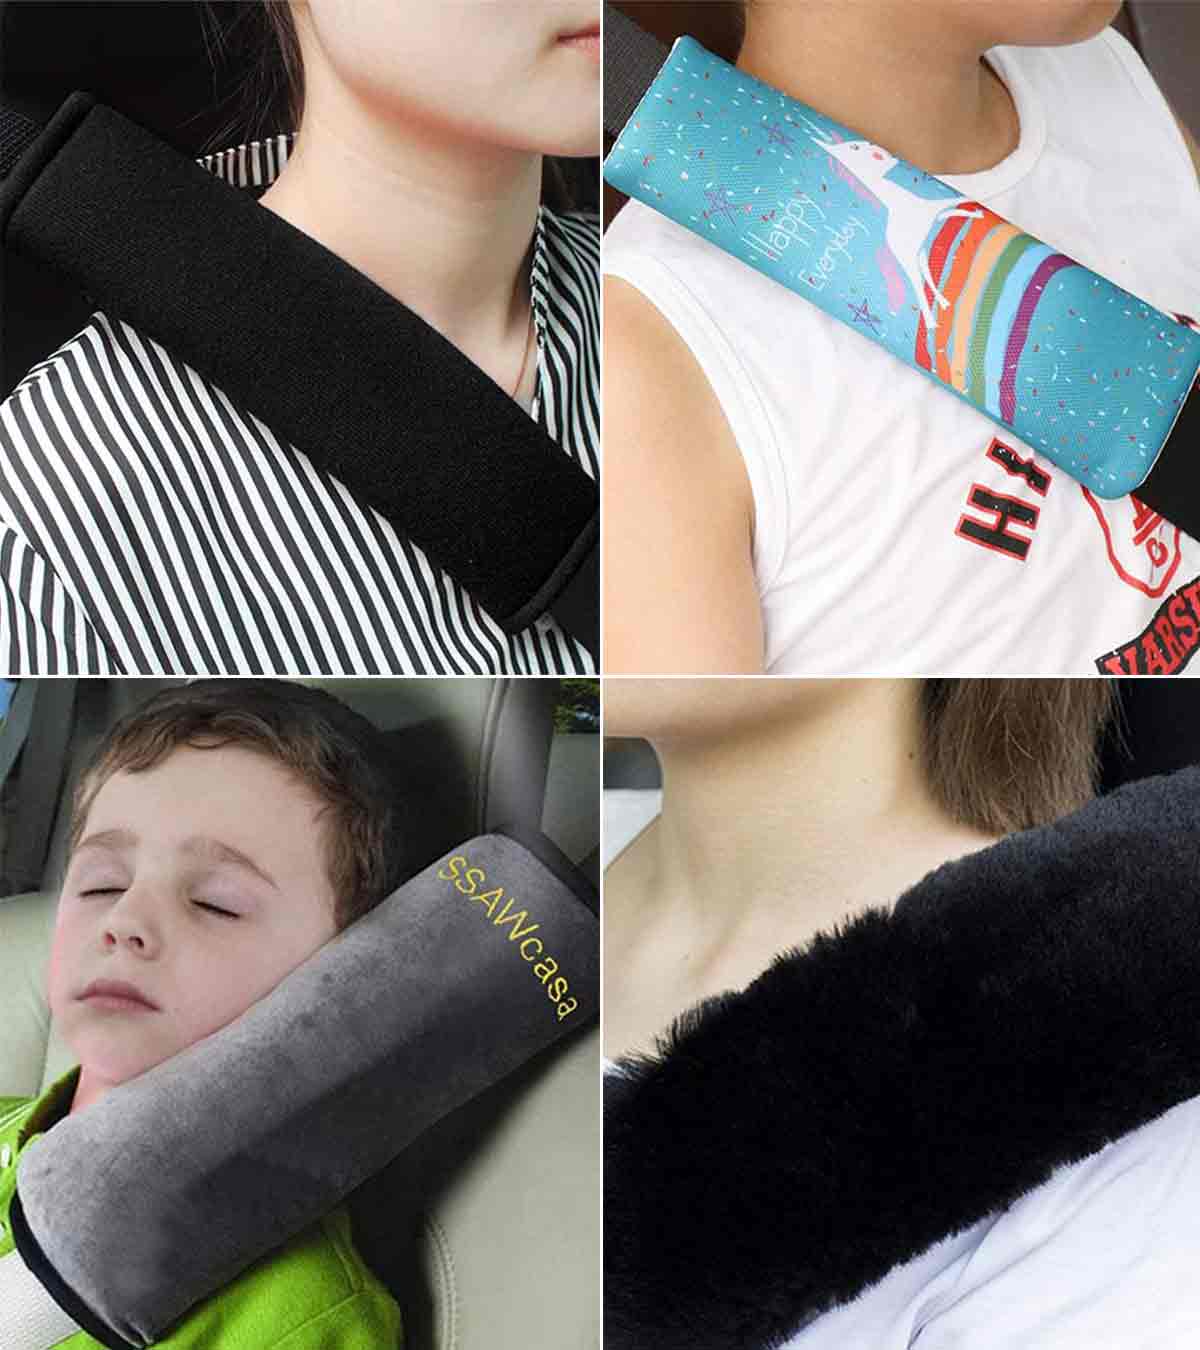 https://www.momjunction.com/wp-content/uploads/2020/02/12-Best-Seat-Belt-Covers-To-Buy-In-2020-7.jpg